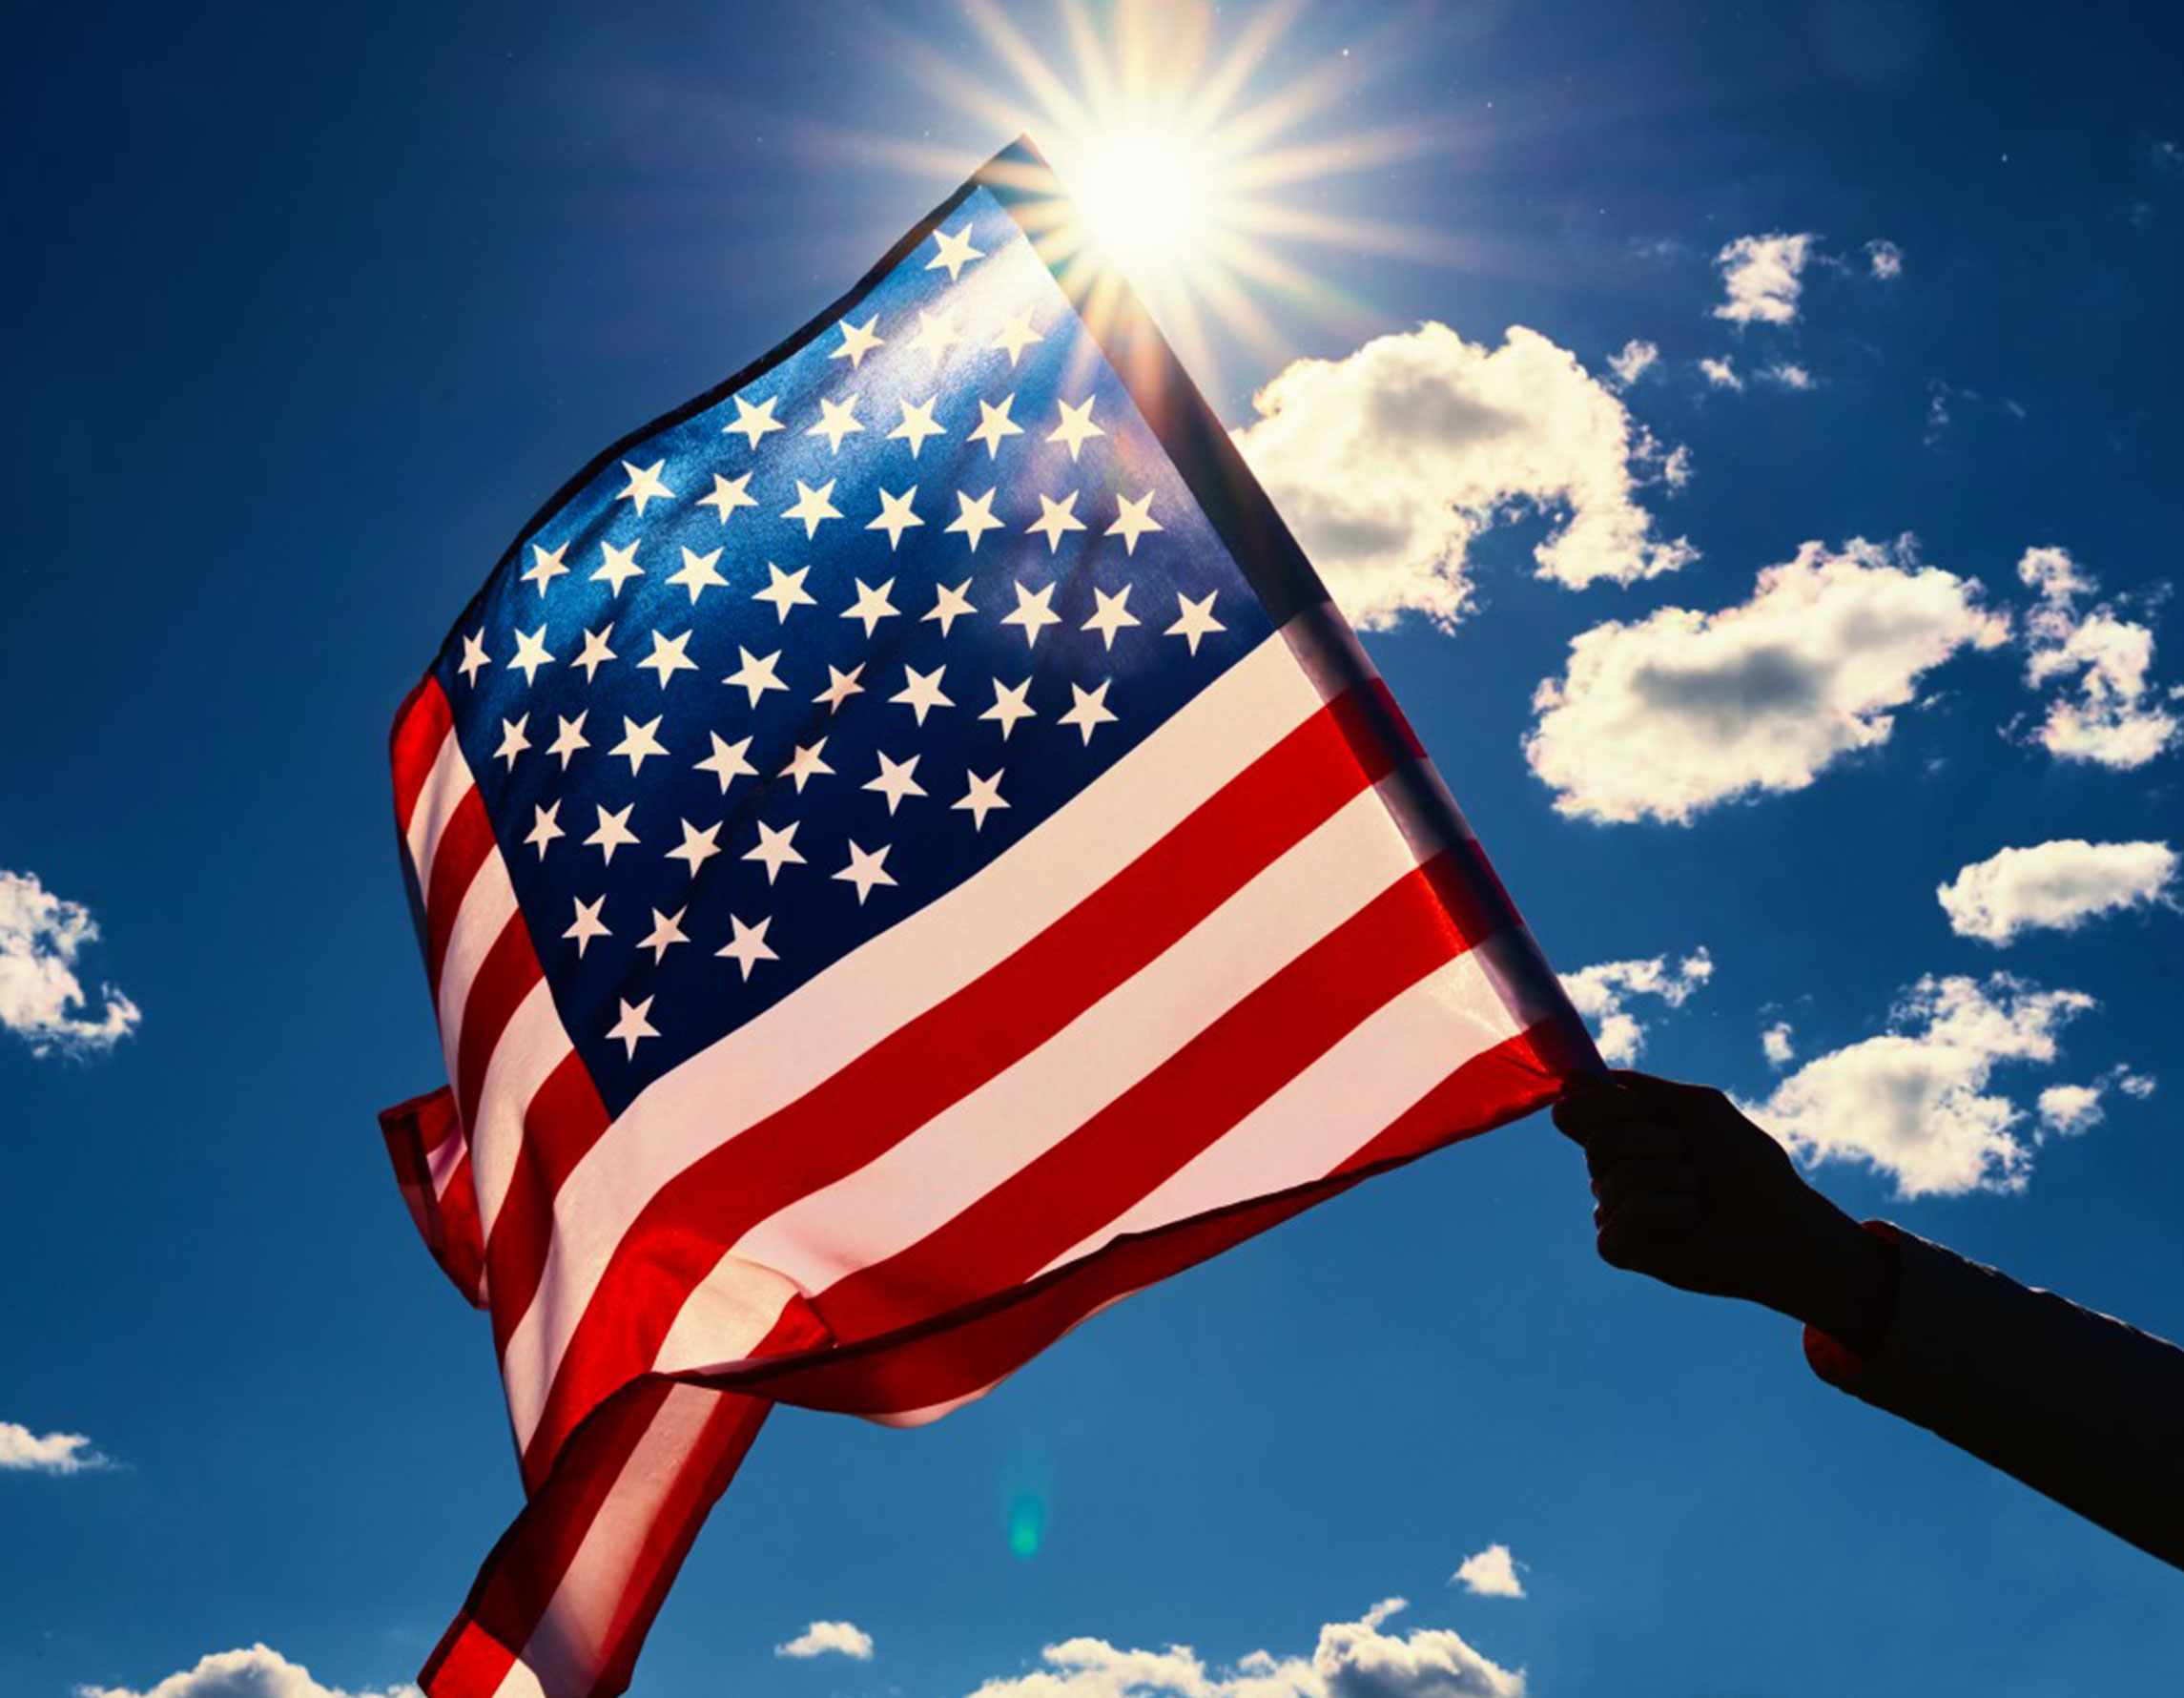 American flag with sunburst